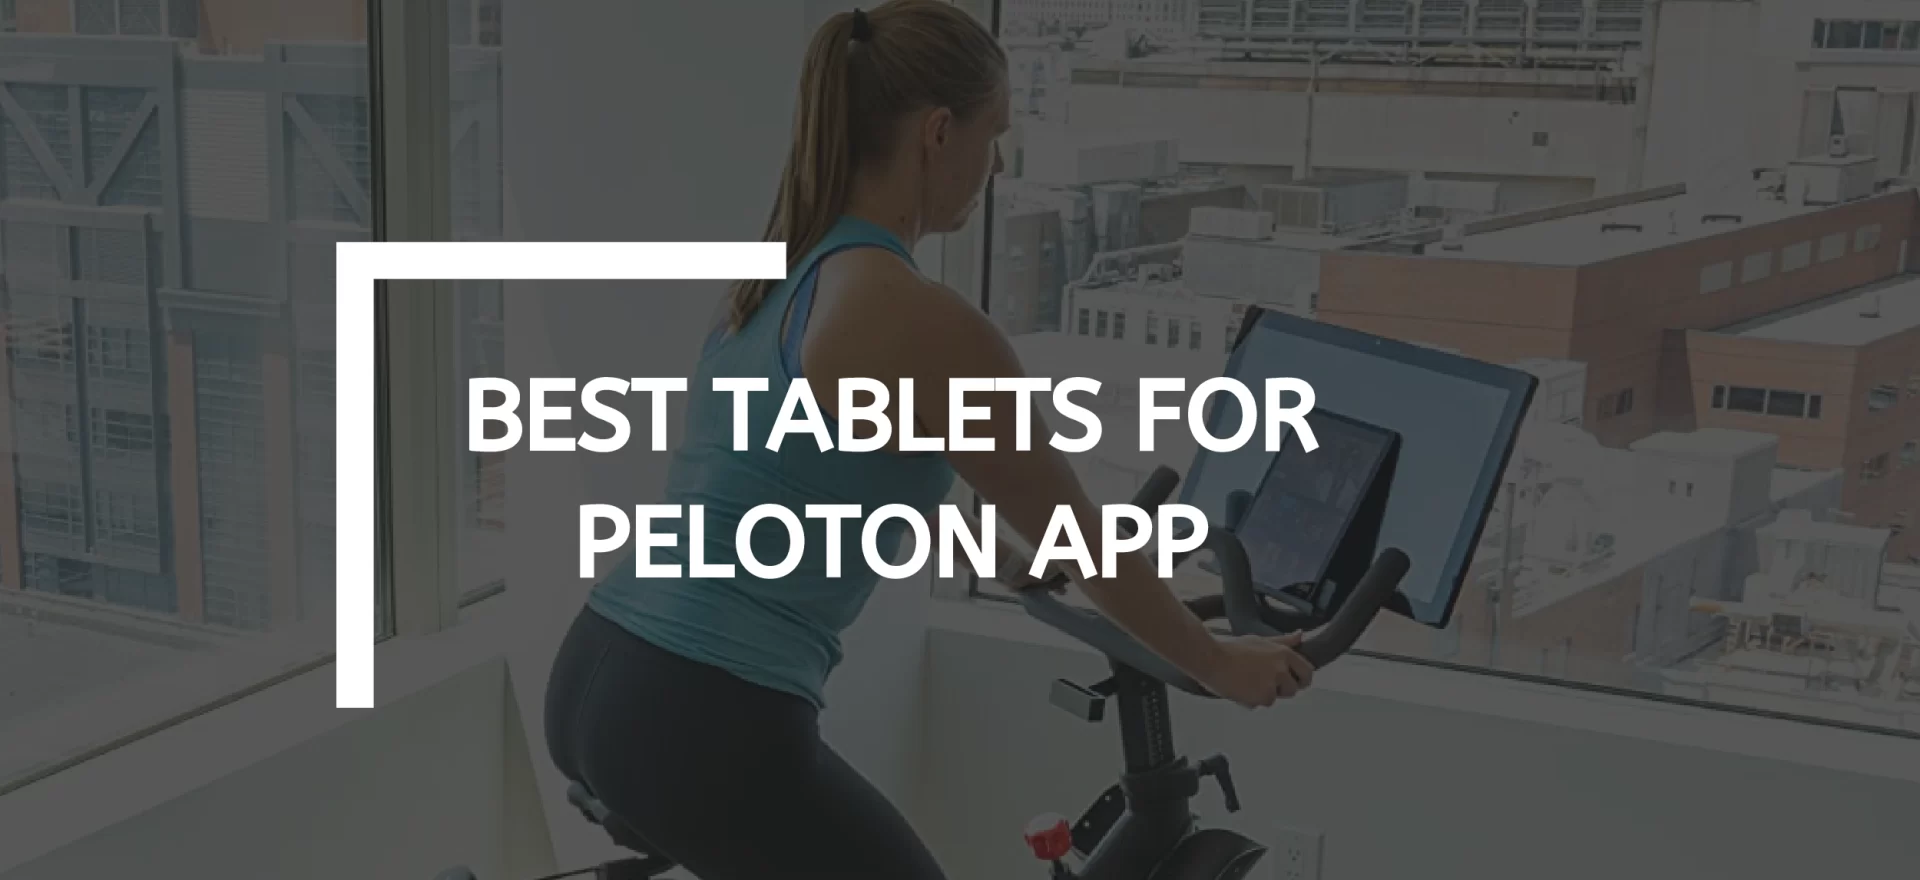 Best-Tablets-For-Peloton-App